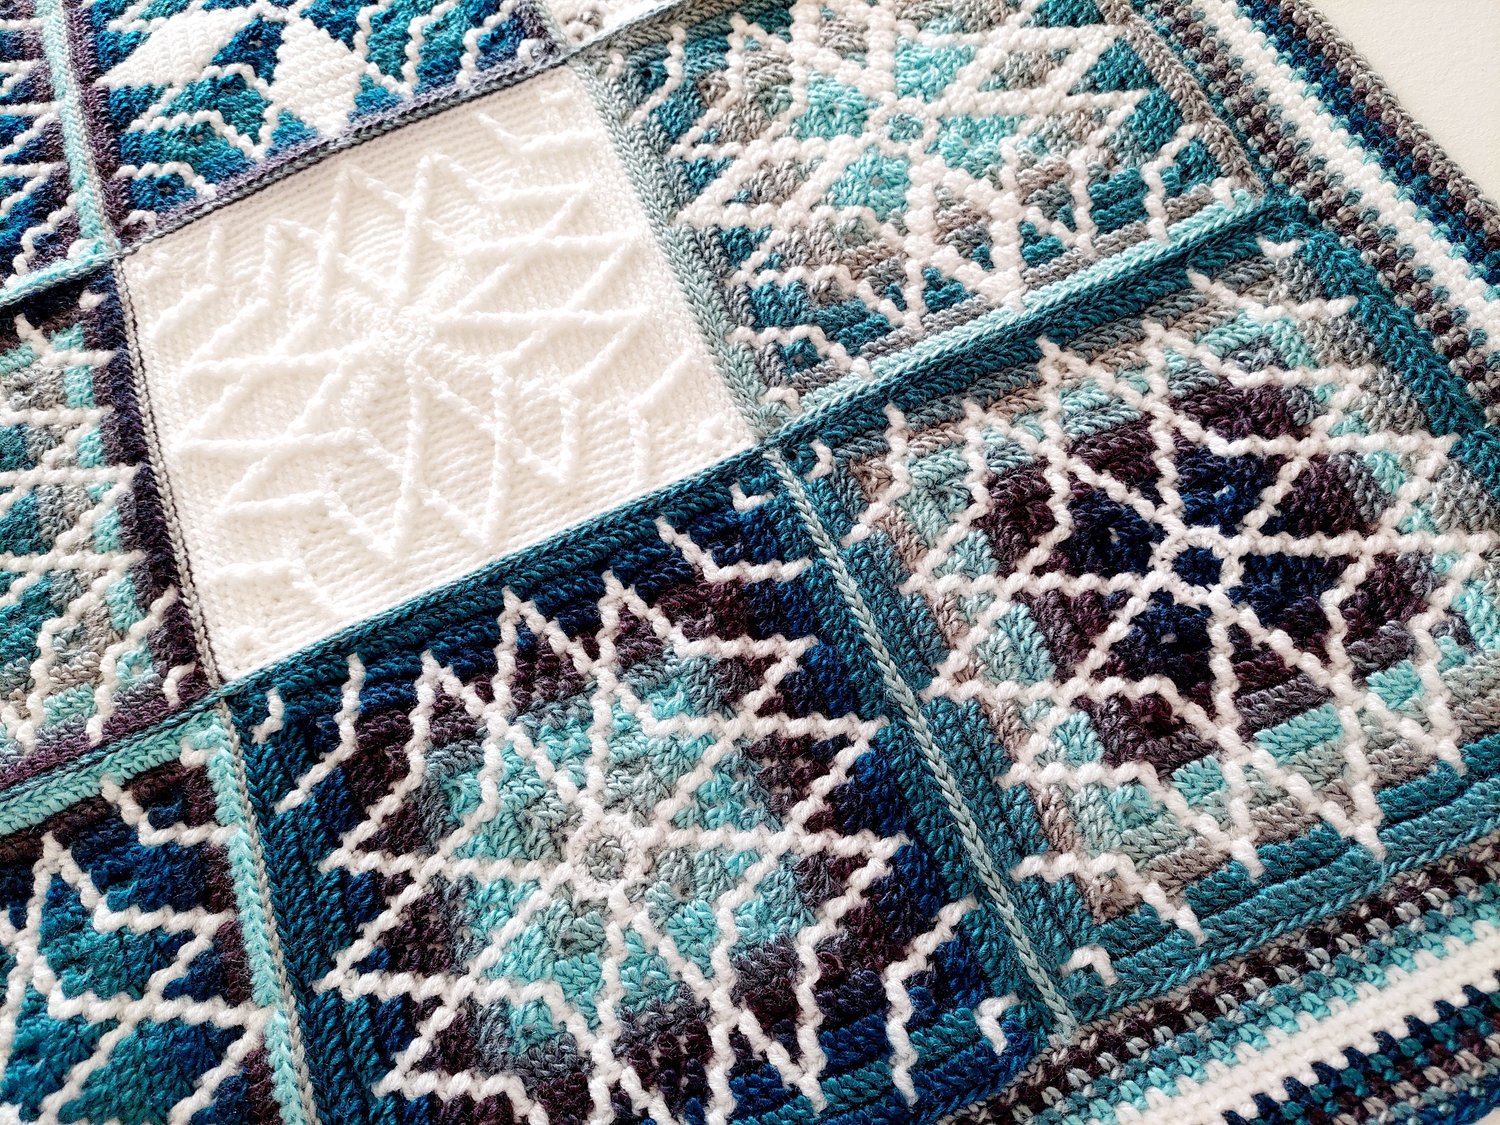 Summer Mosaic Jewels. Three overlay mosaic crochet in rounds motif patterns